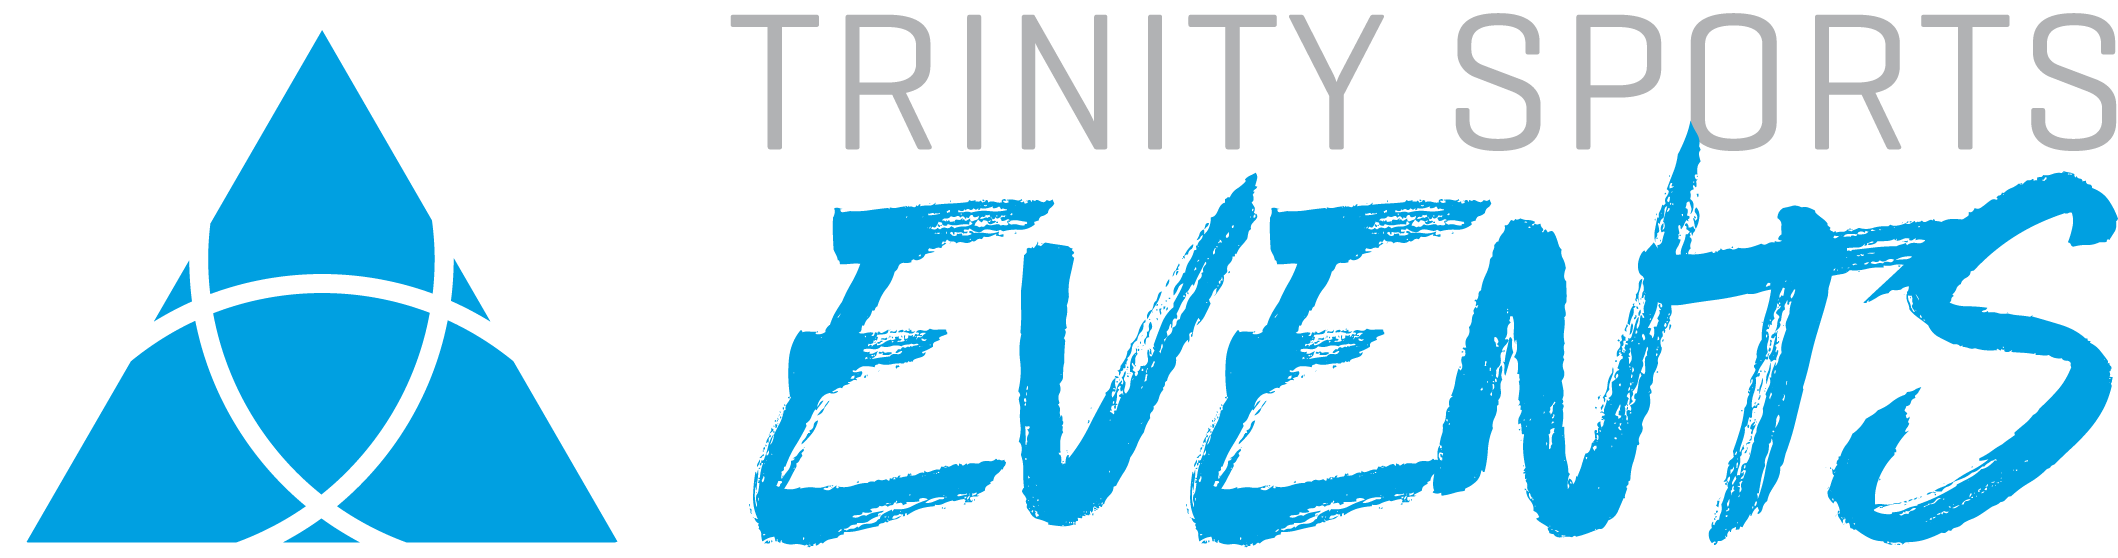 Trinity Sports Events